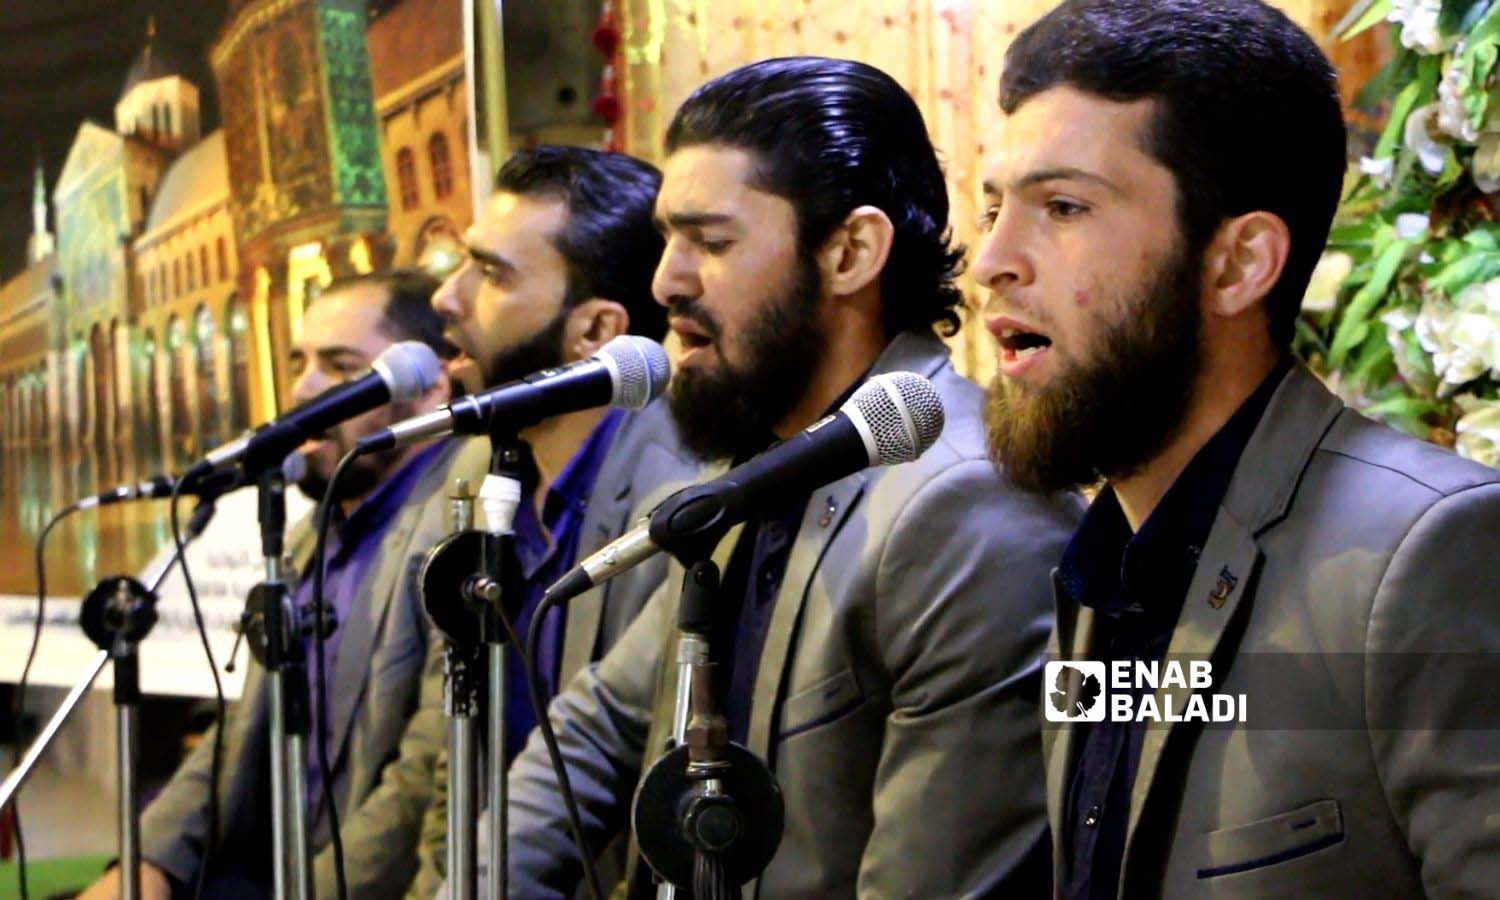 The Nidaa’ al-Iman (Call of Faith) band for religious chants at a wedding in the northwestern city of Idlib - April 6, 2019 (Enab Baladi)